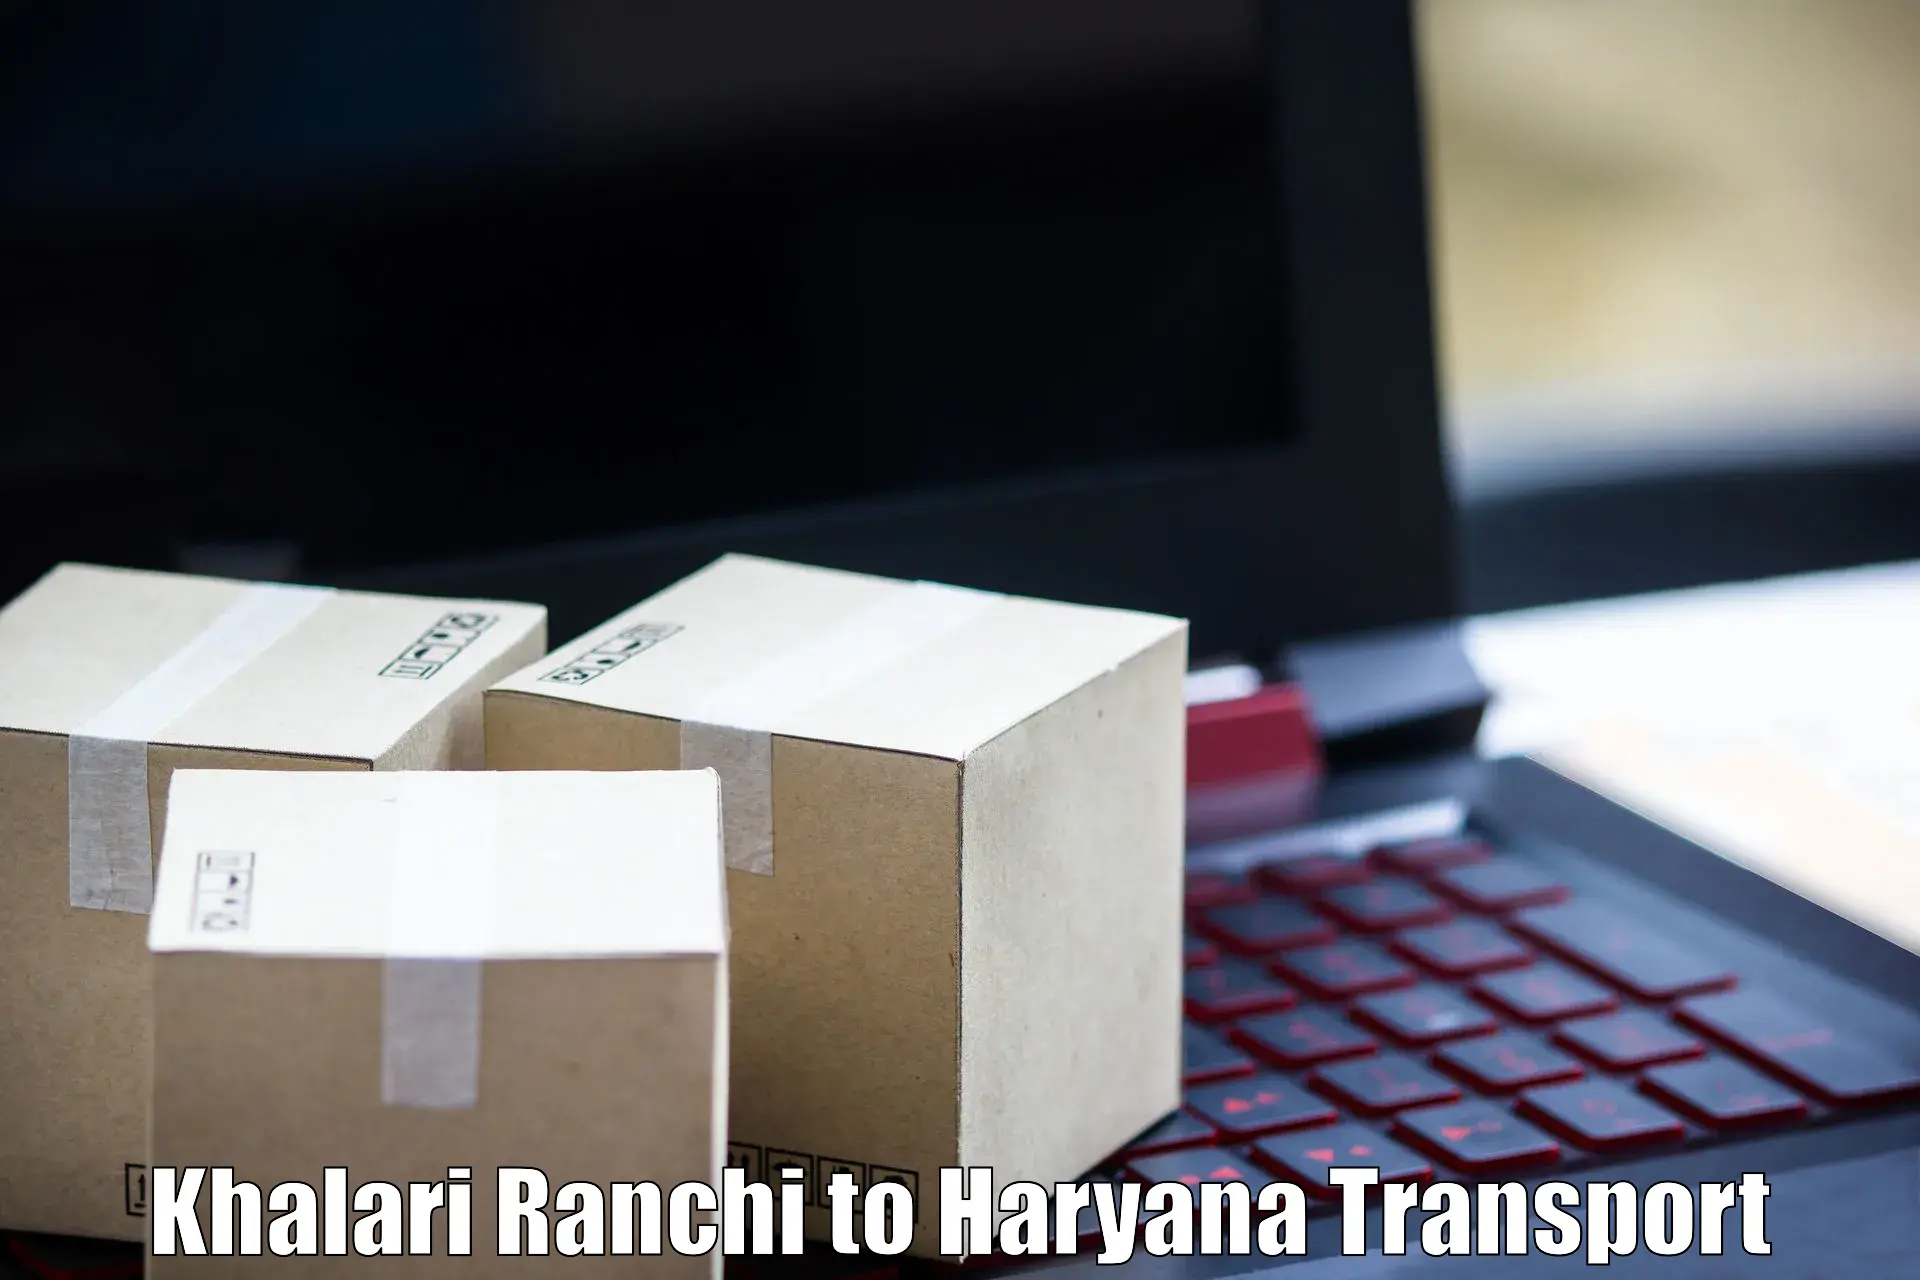 Furniture transport service Khalari Ranchi to Loharu